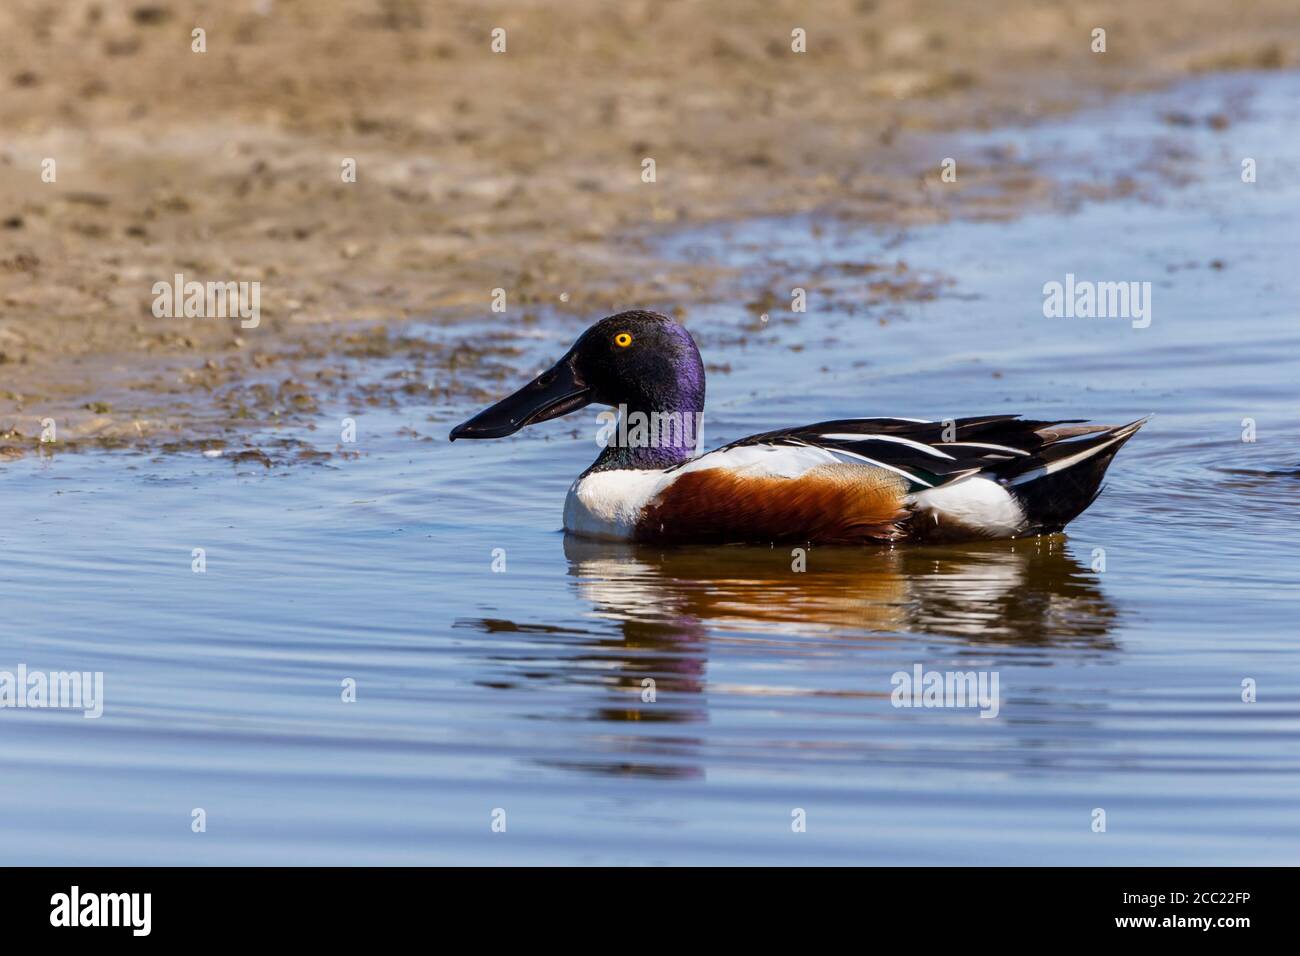 Germany, Schleswig Holstein, Shoveler bird swimming in water Stock Photo